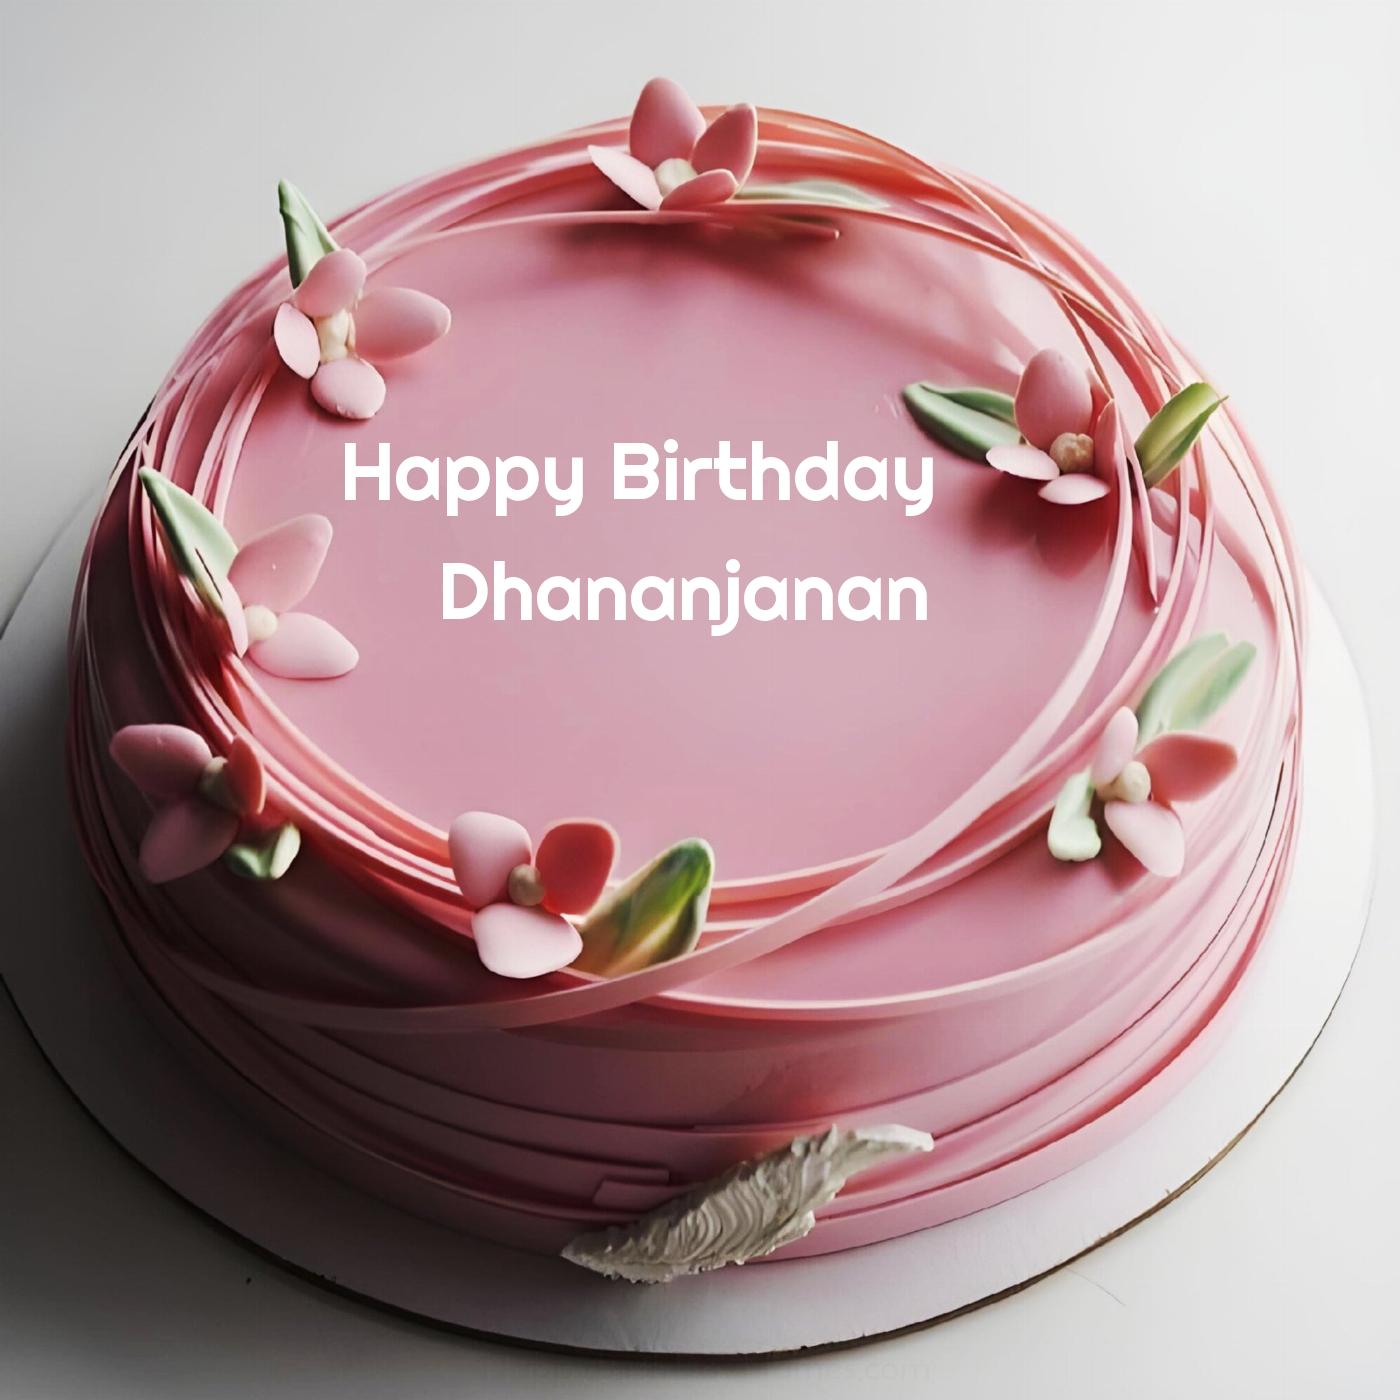 Happy Birthday Dhananjanan Pink Flowers Cake